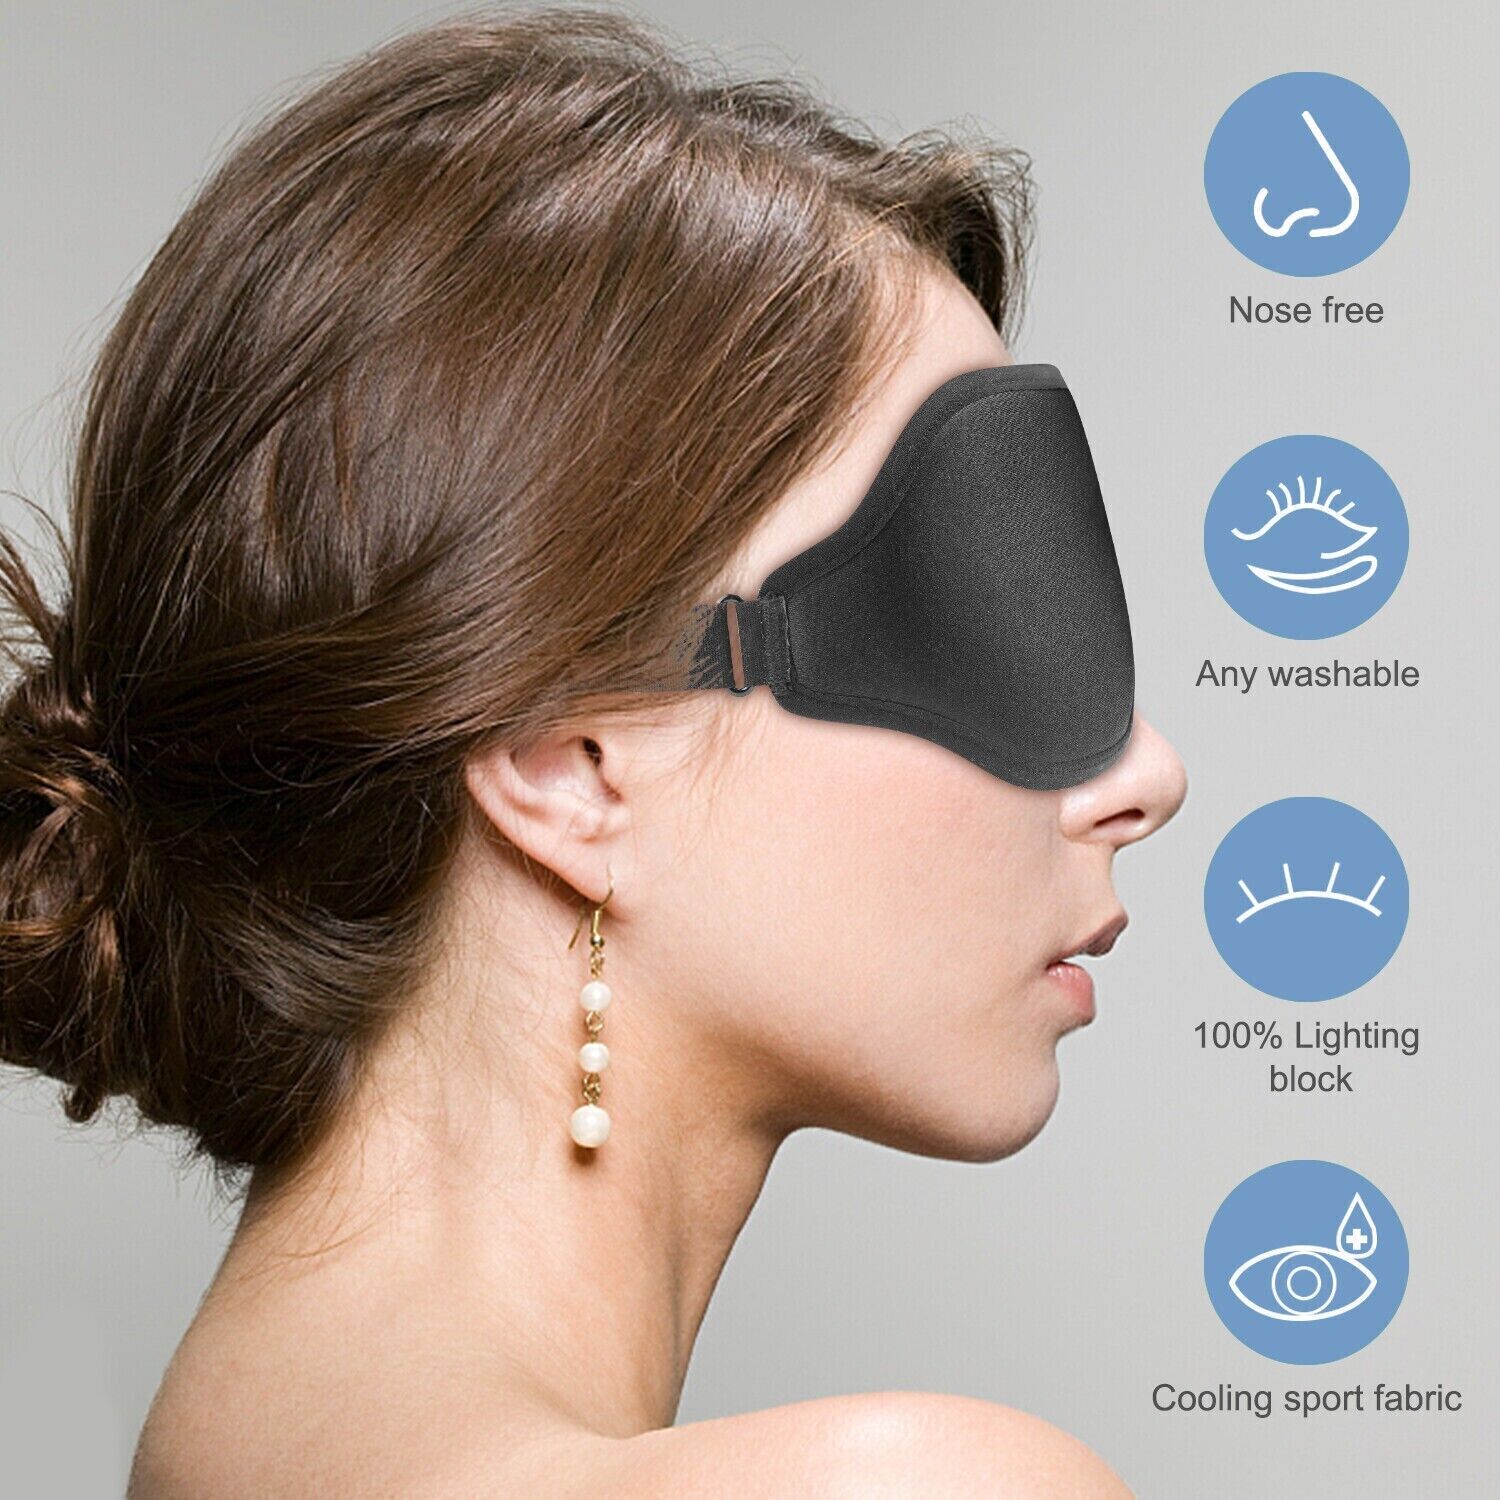 Travel 3D Eye Mask Sleep Soft Padded Shade Cover Rest Relax Sleeping Blindfold